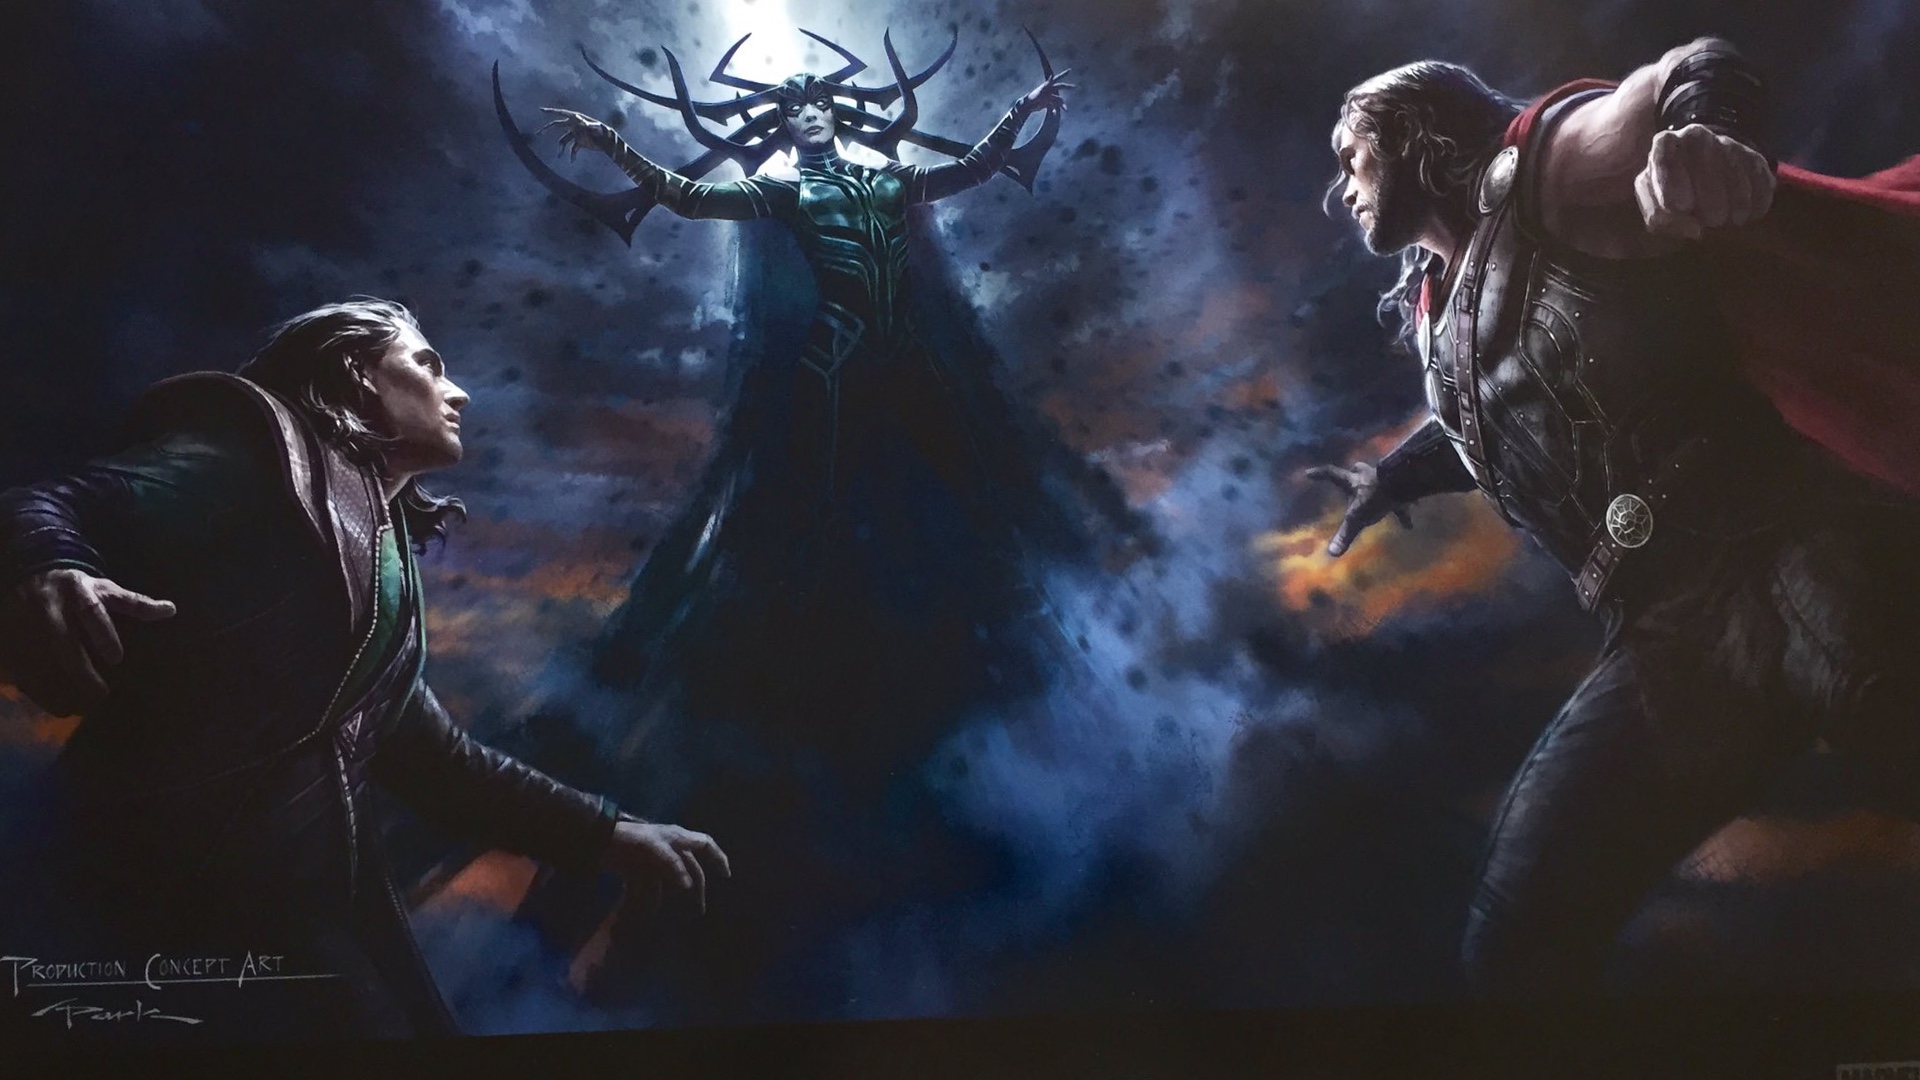 Comic-Con: Marvel's 'Thor: Ragnarok' unleashes new trailer